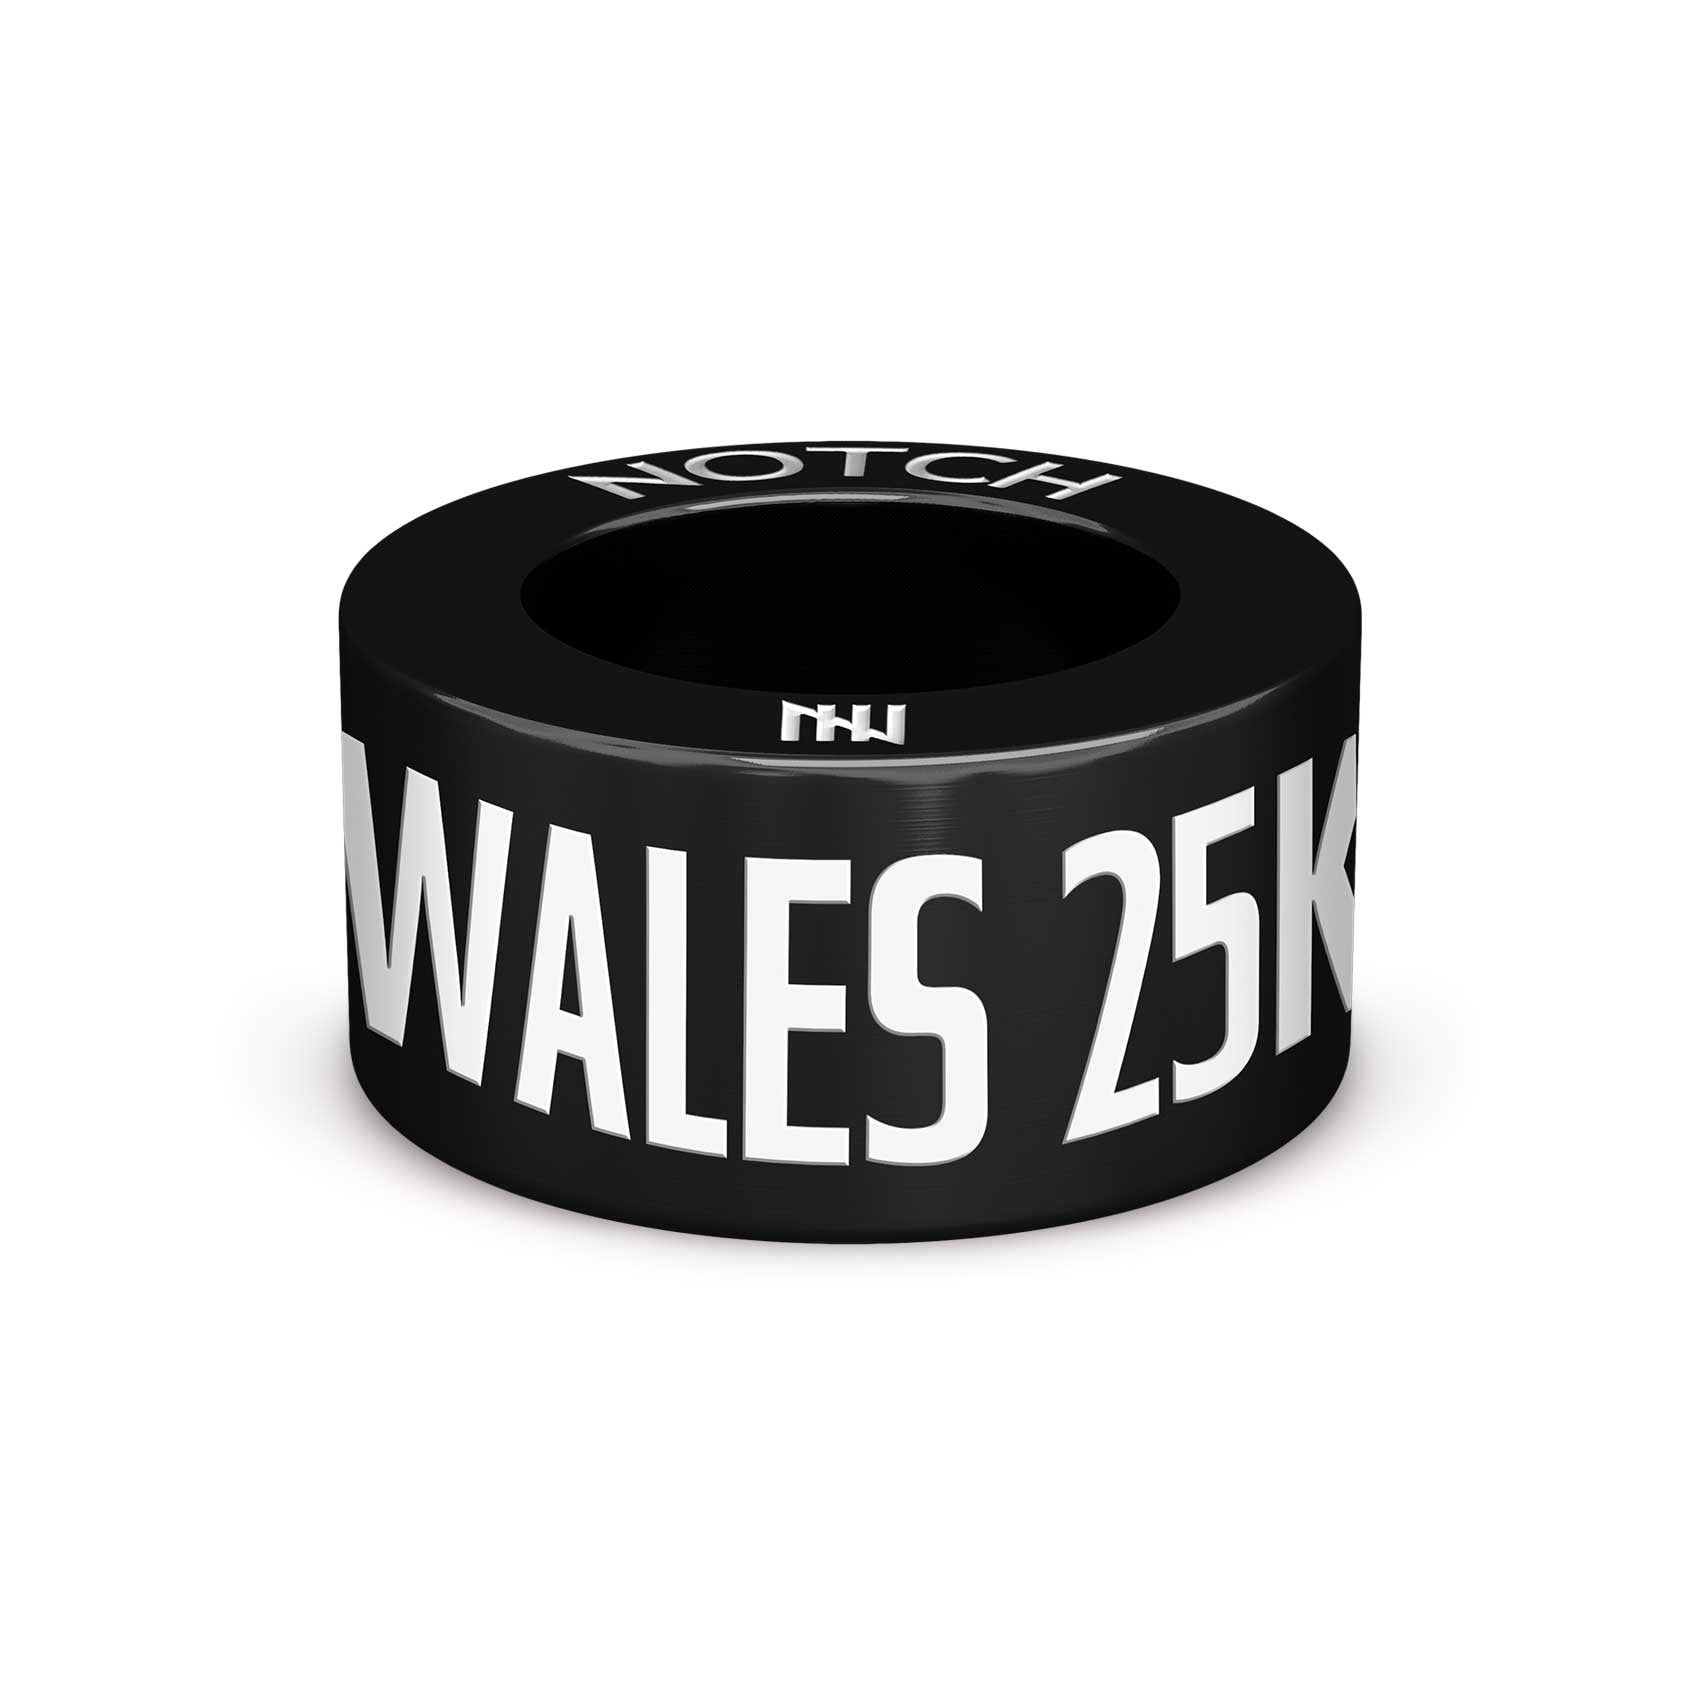 Wales 25K NOTCH Charm